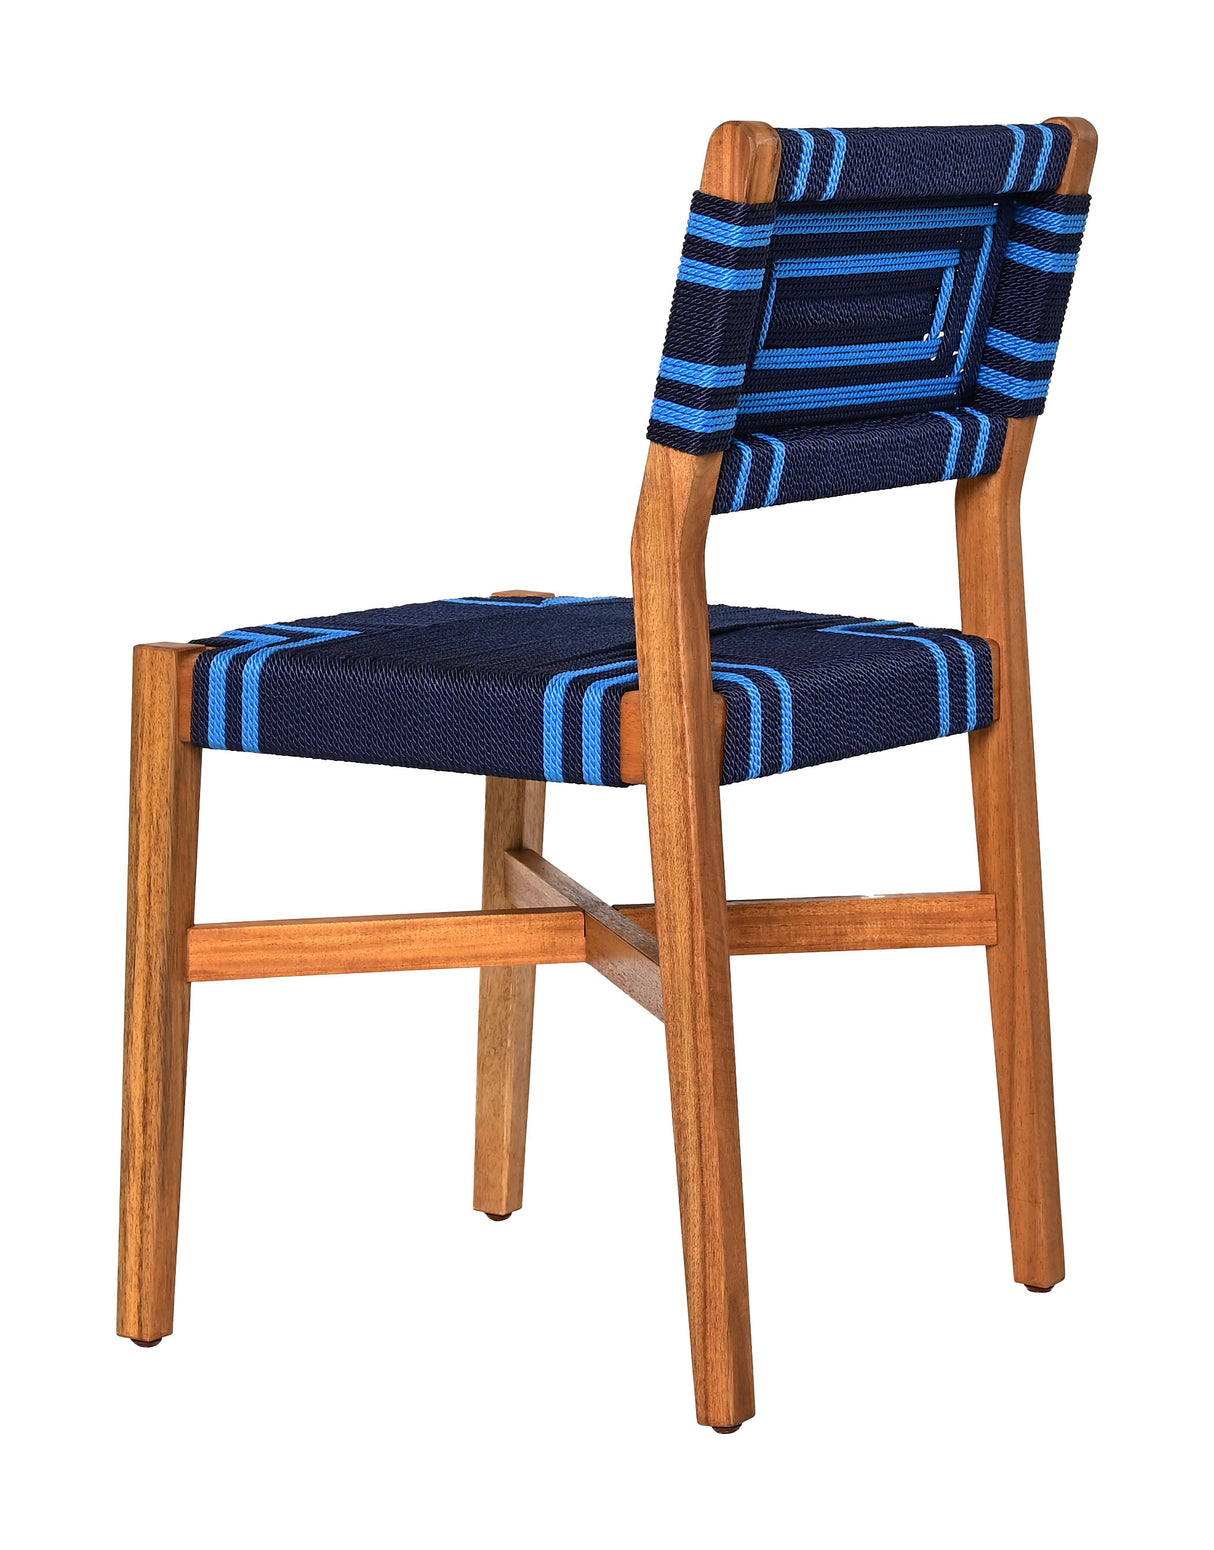 Serene Dining Chair Blue